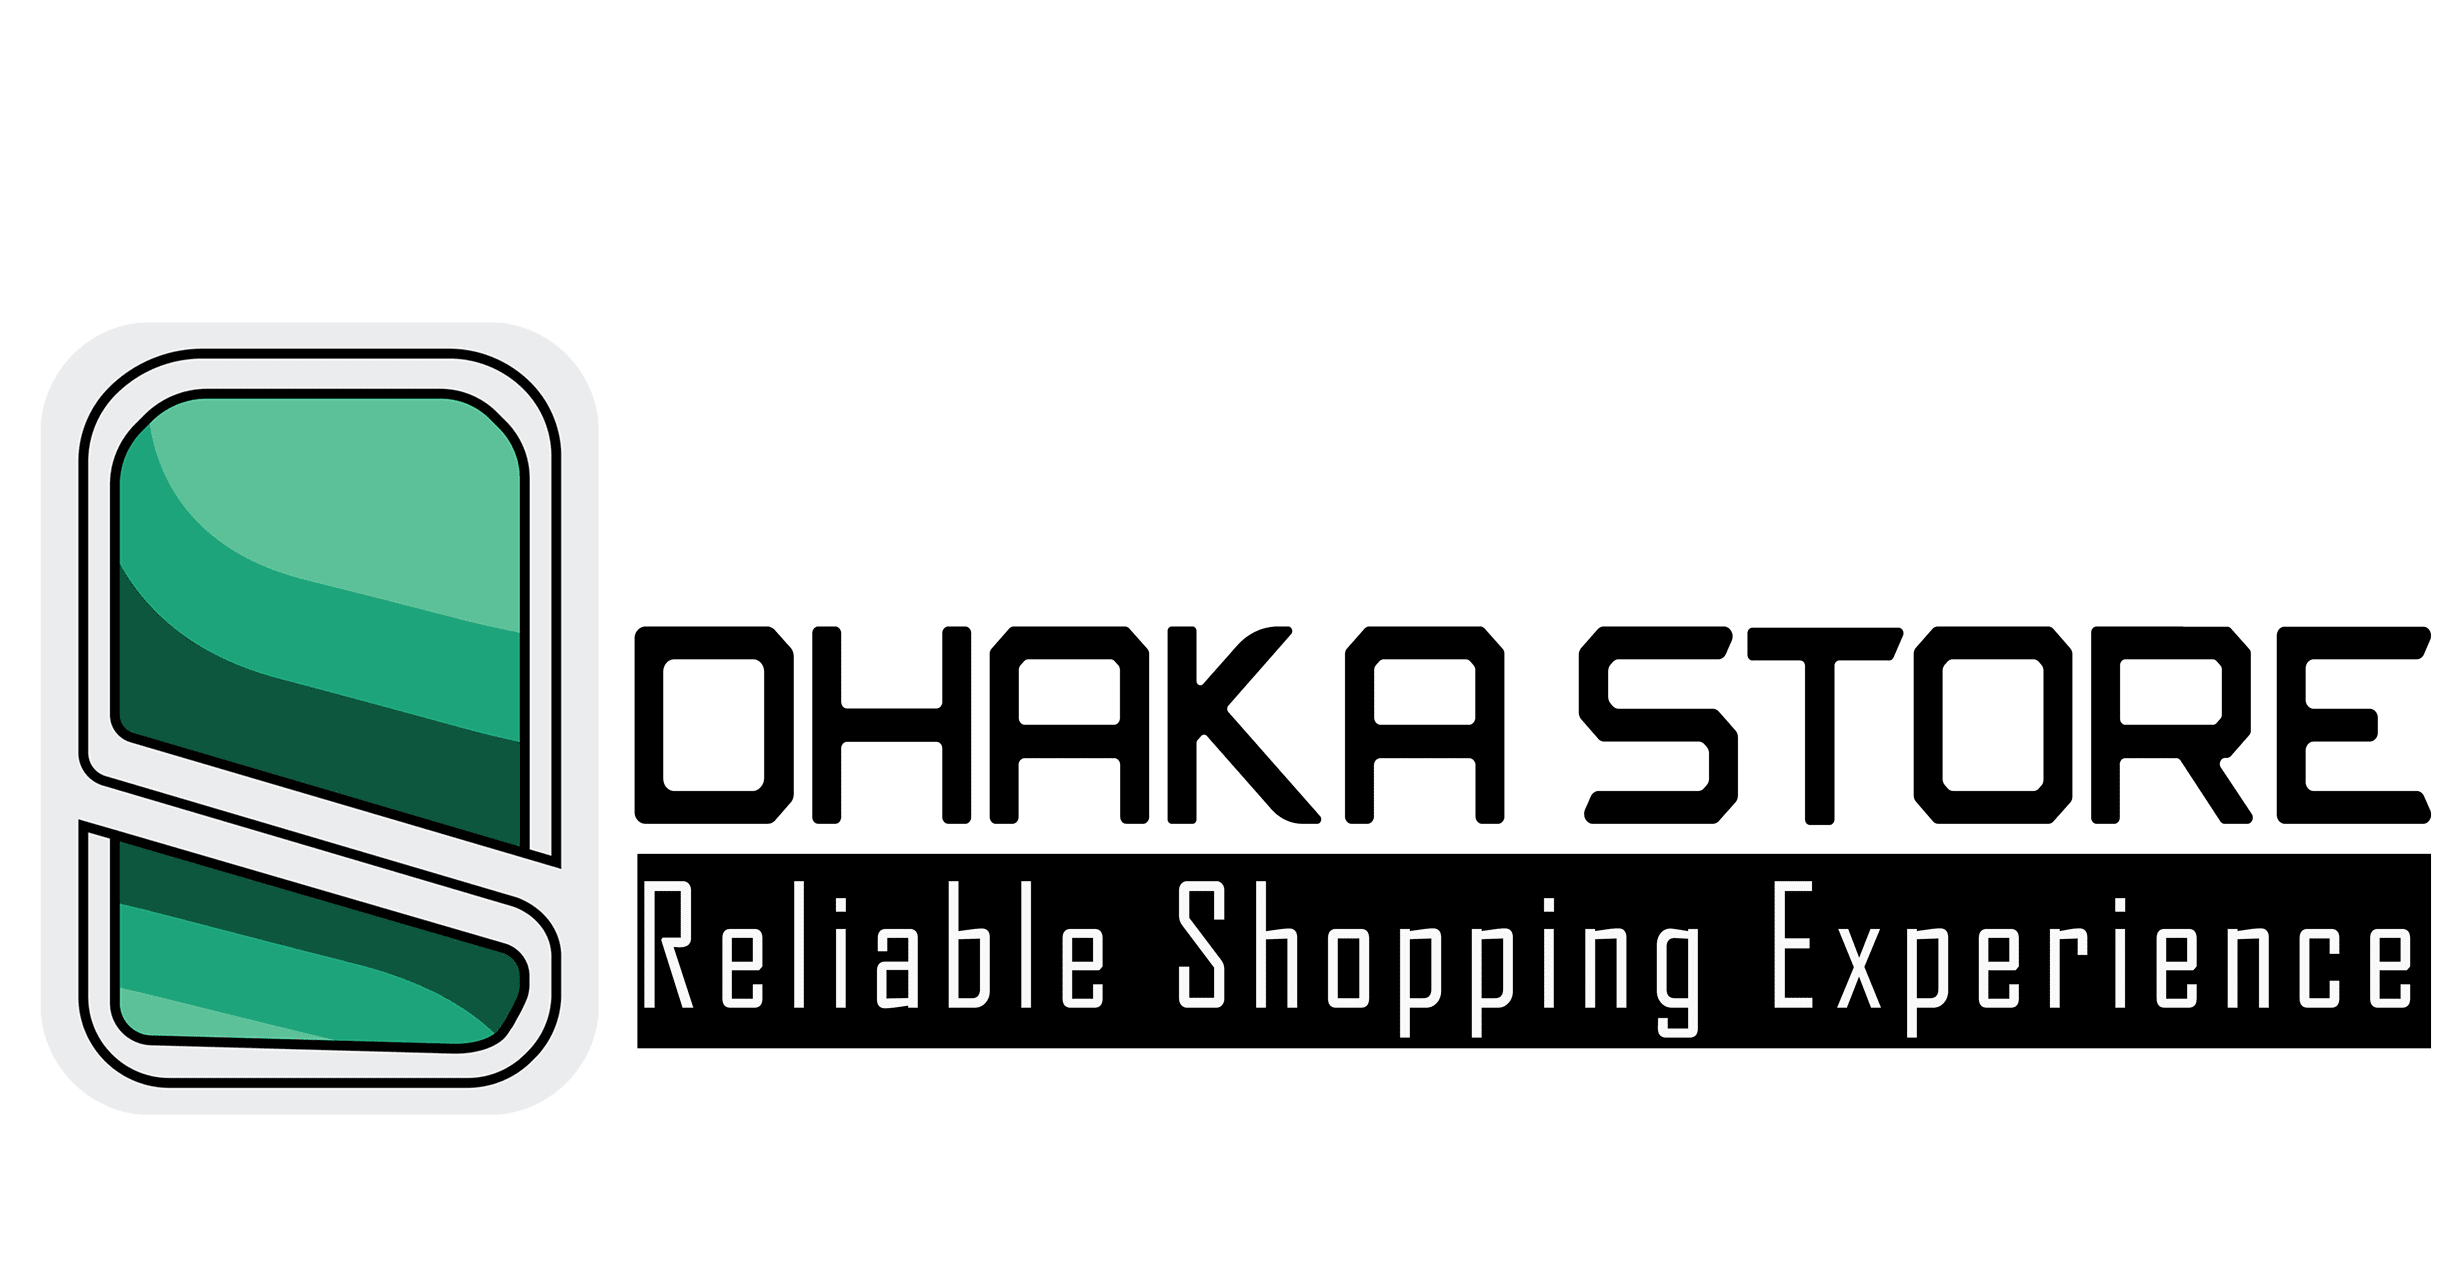 Dhaka Store Online